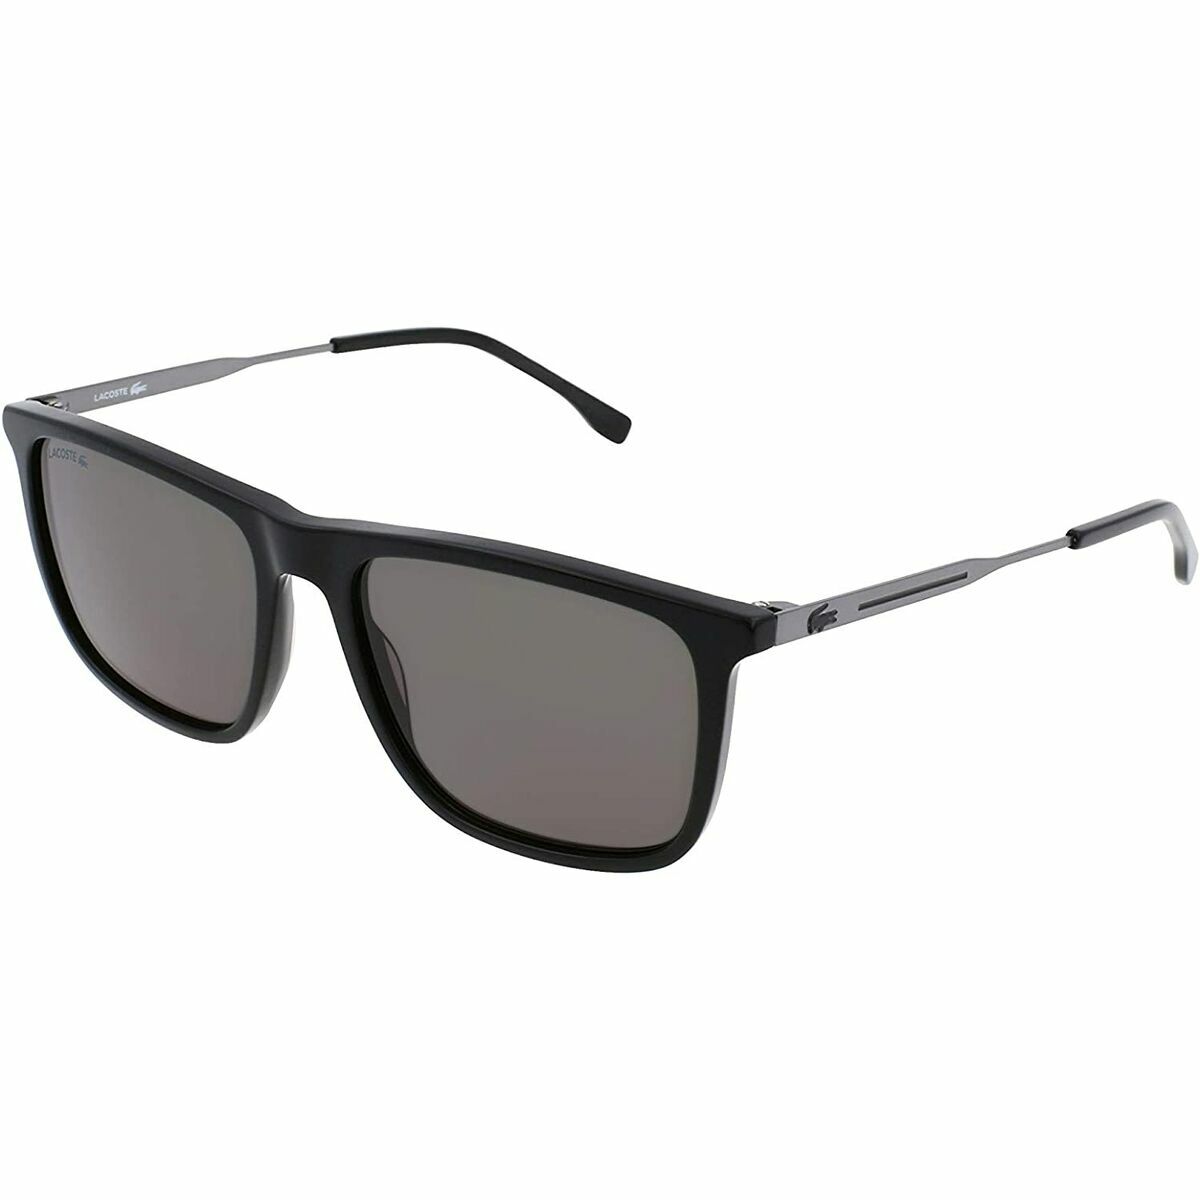 Unisex Sunglasses Lacoste L945S